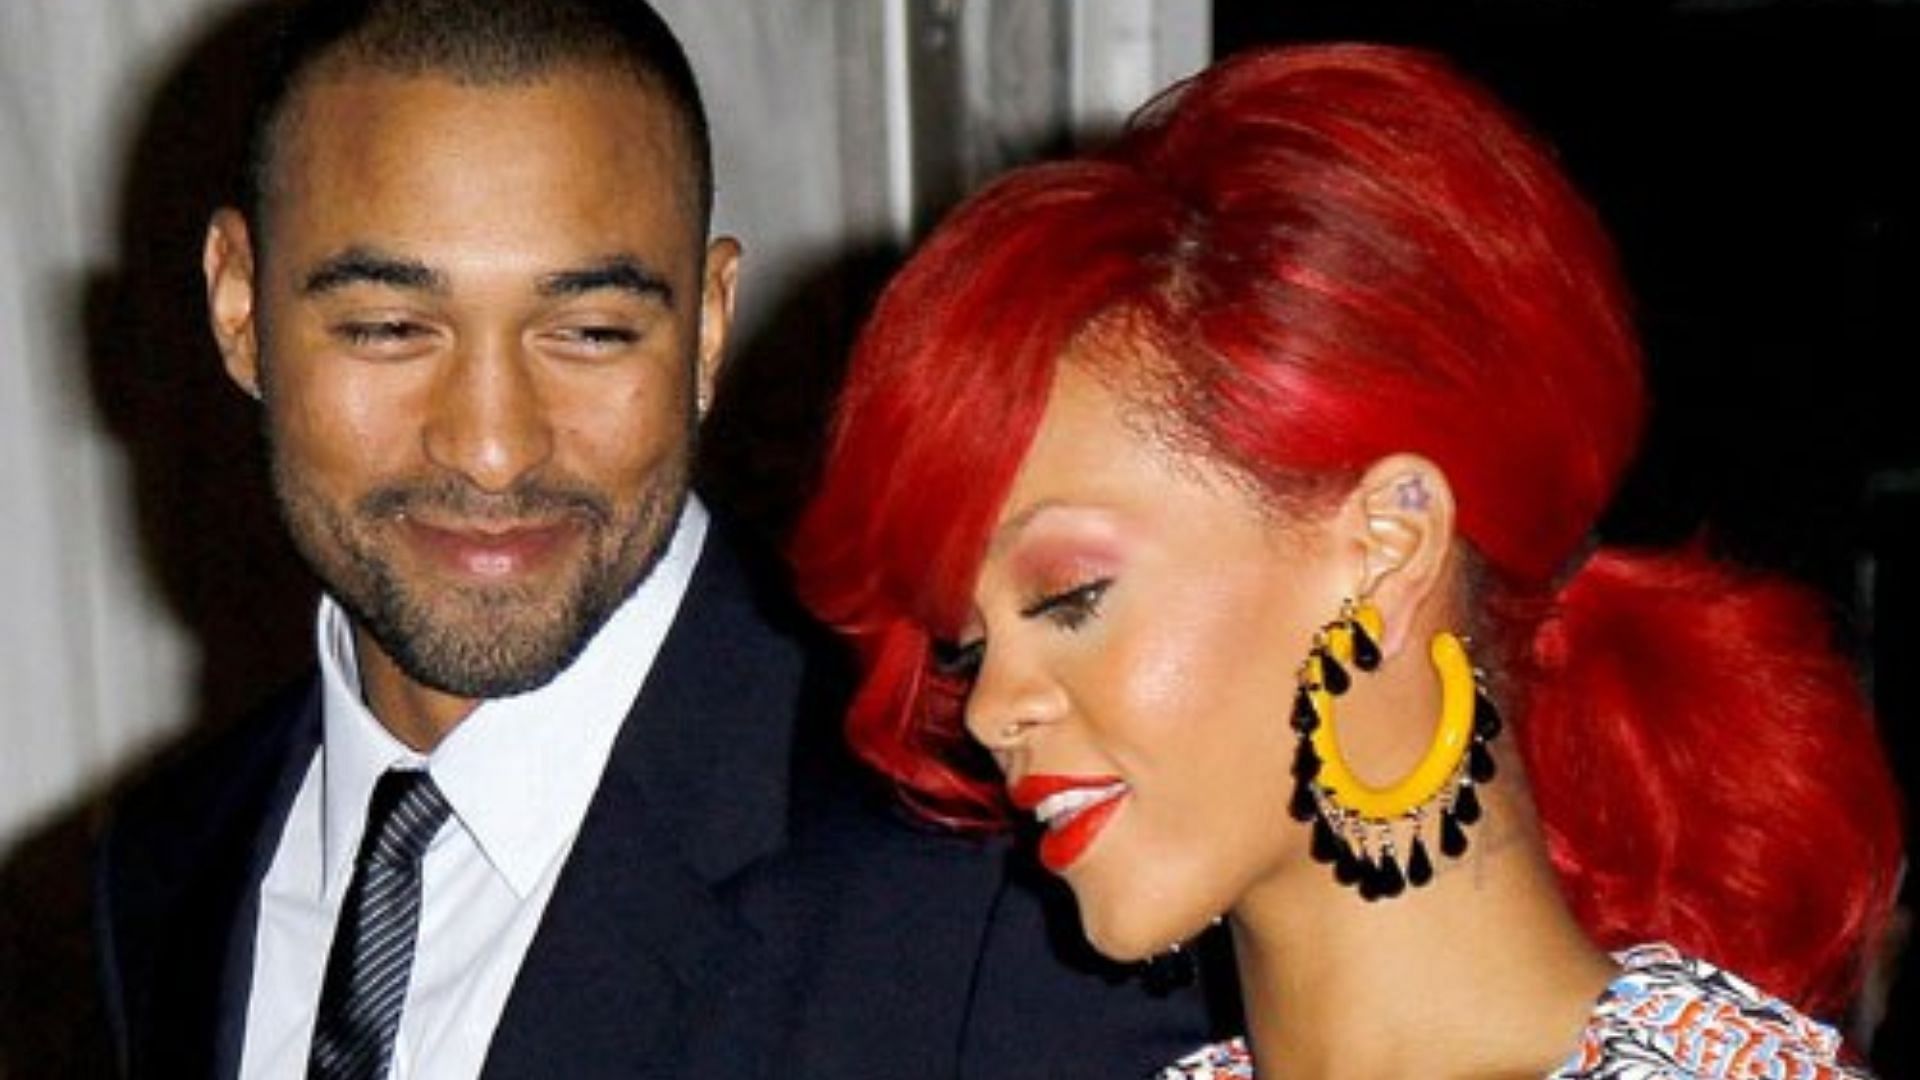 Rihanna had a highly-publicized affair with MLB player Matt Kemp in late 2000s.